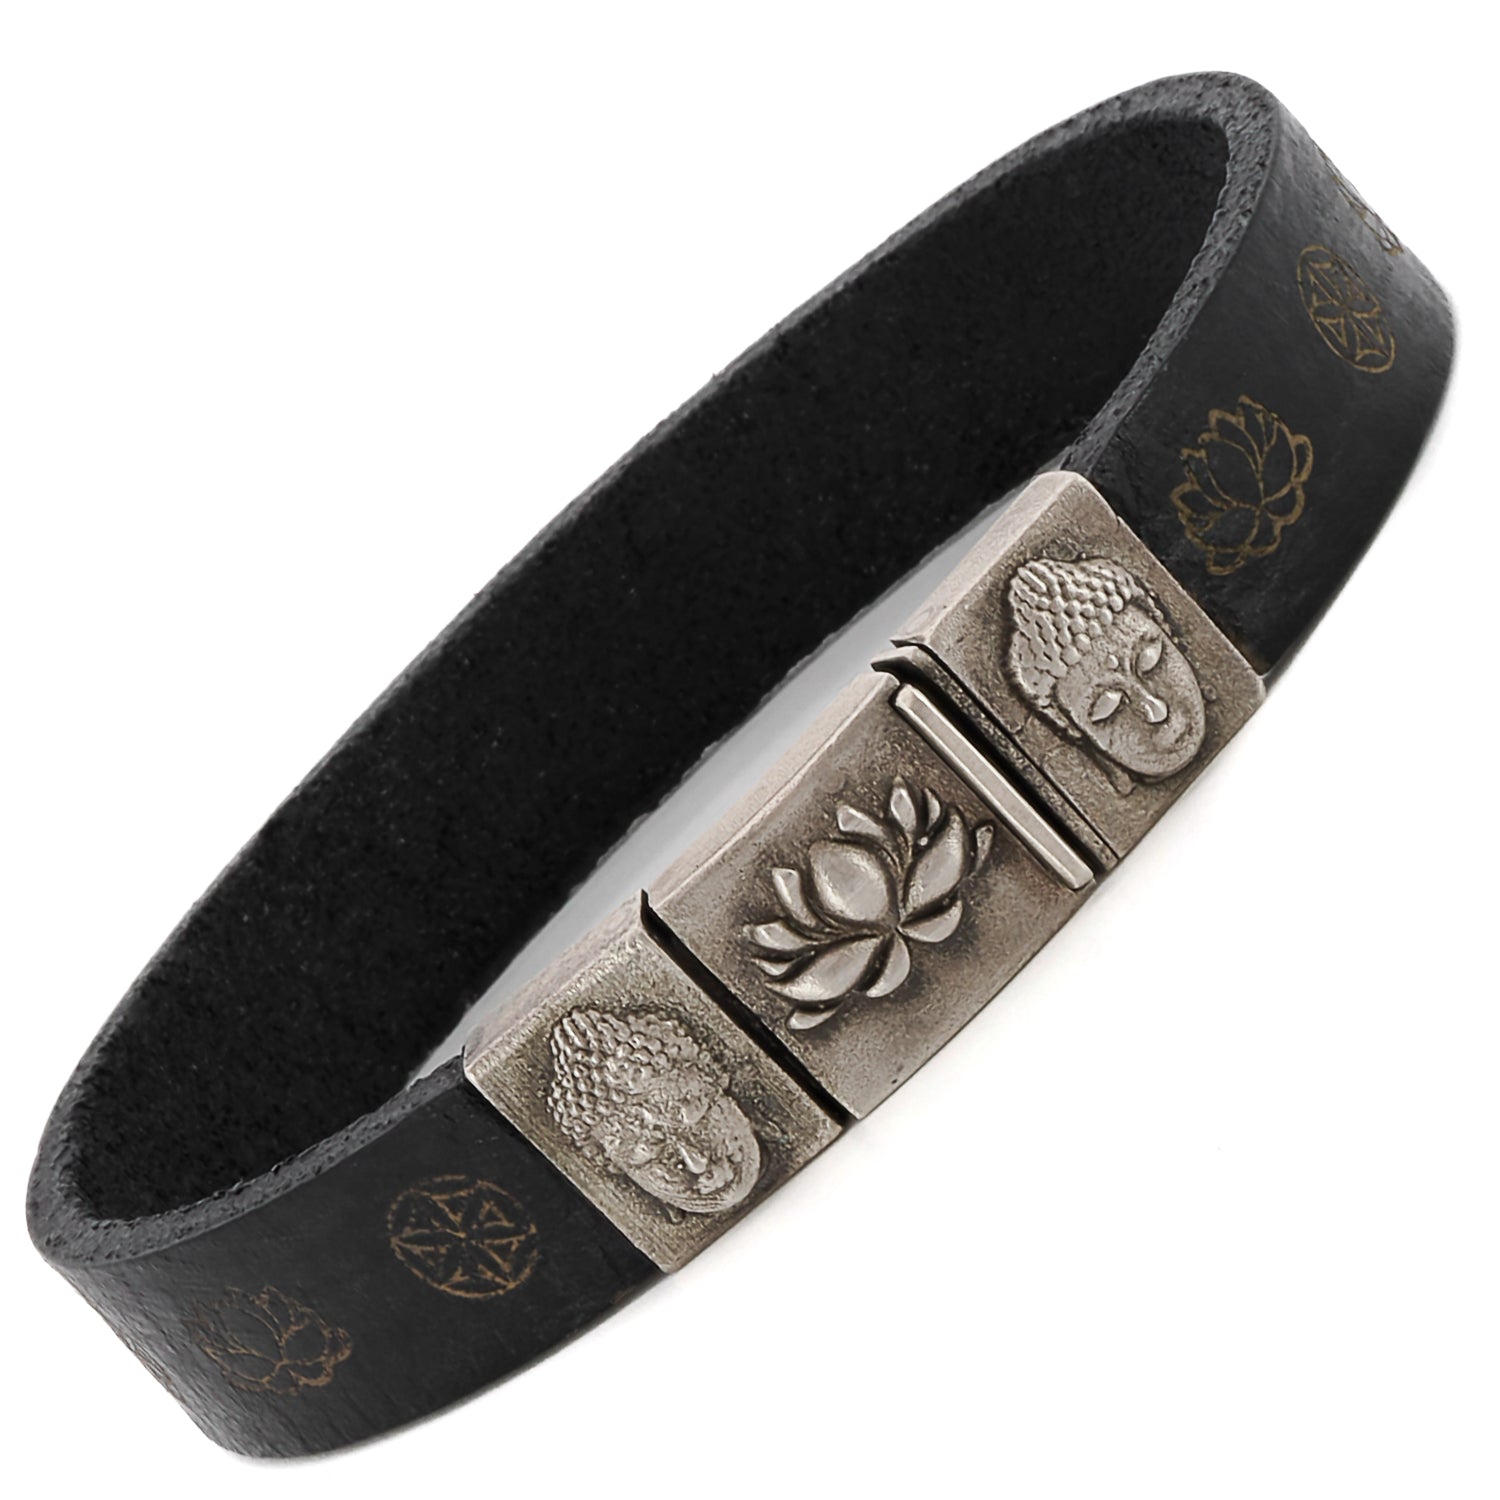 Elegance and Symbolism - Handmade Bangle Bracelet with Buddha and Lotus Design.